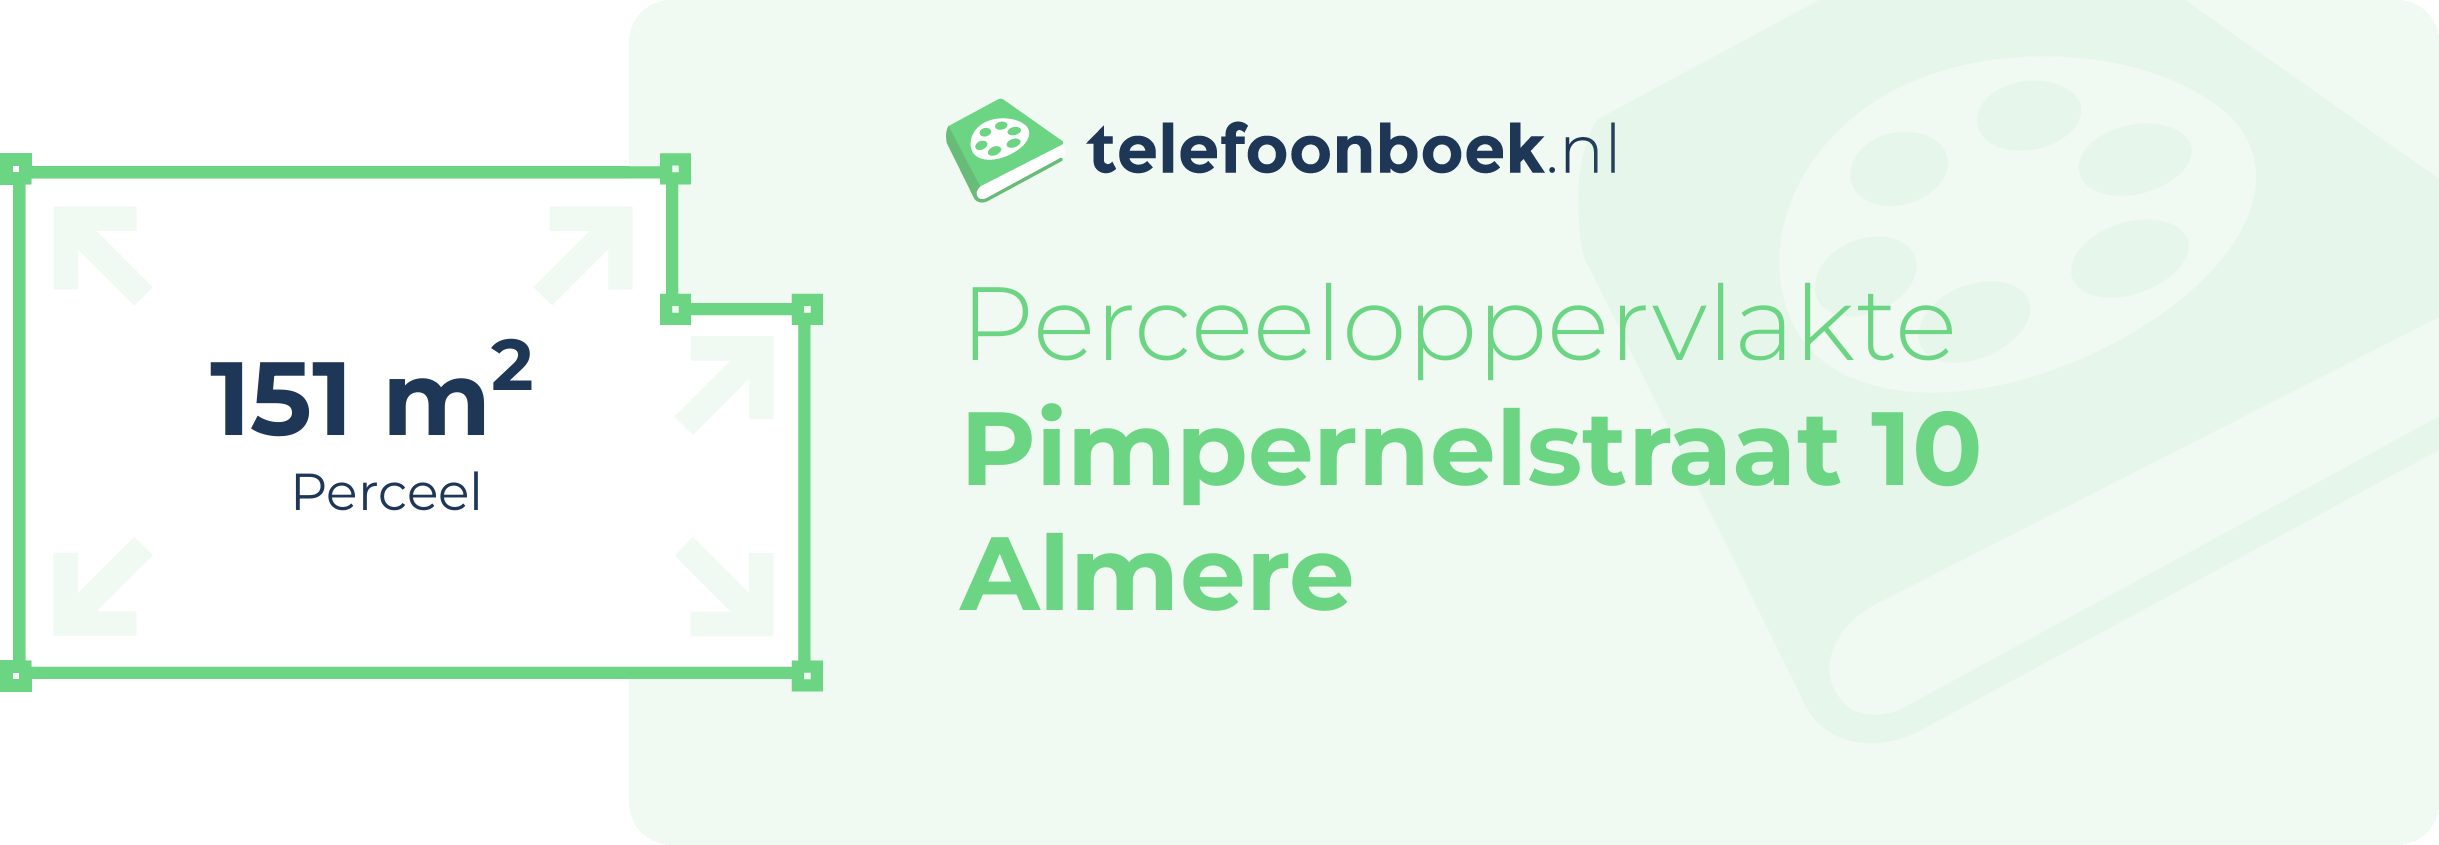 Perceeloppervlakte Pimpernelstraat 10 Almere